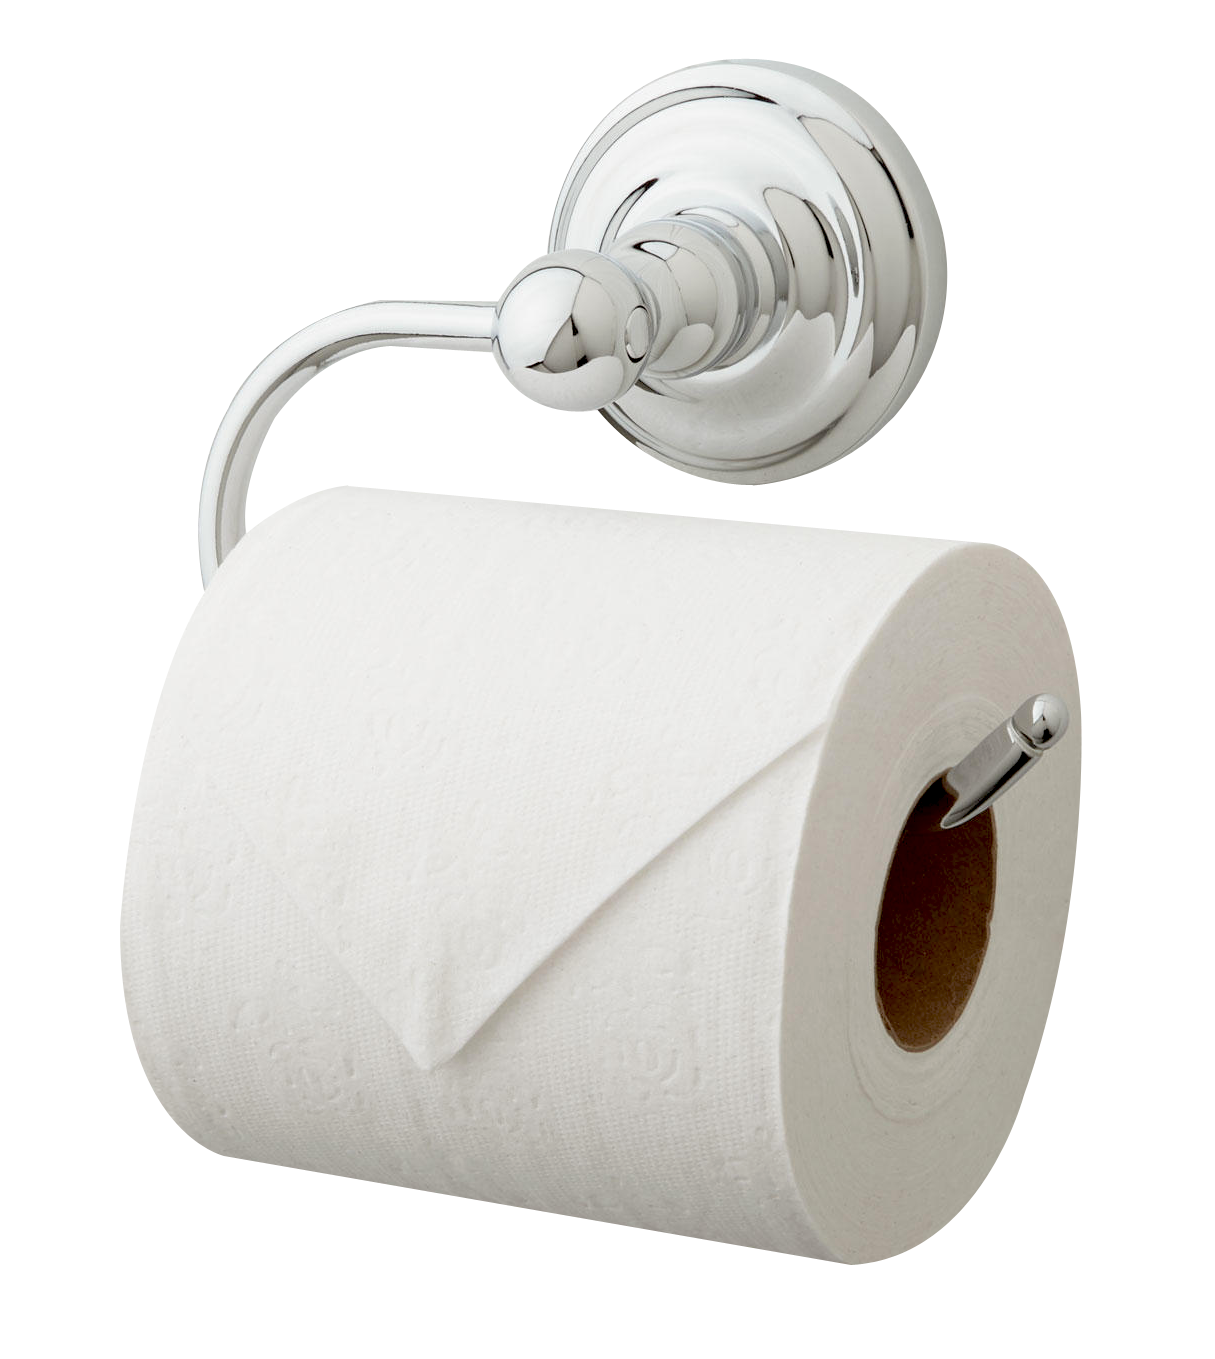 Toilet Paper PNG Image - PurePNG | Free transparent CC0 ...